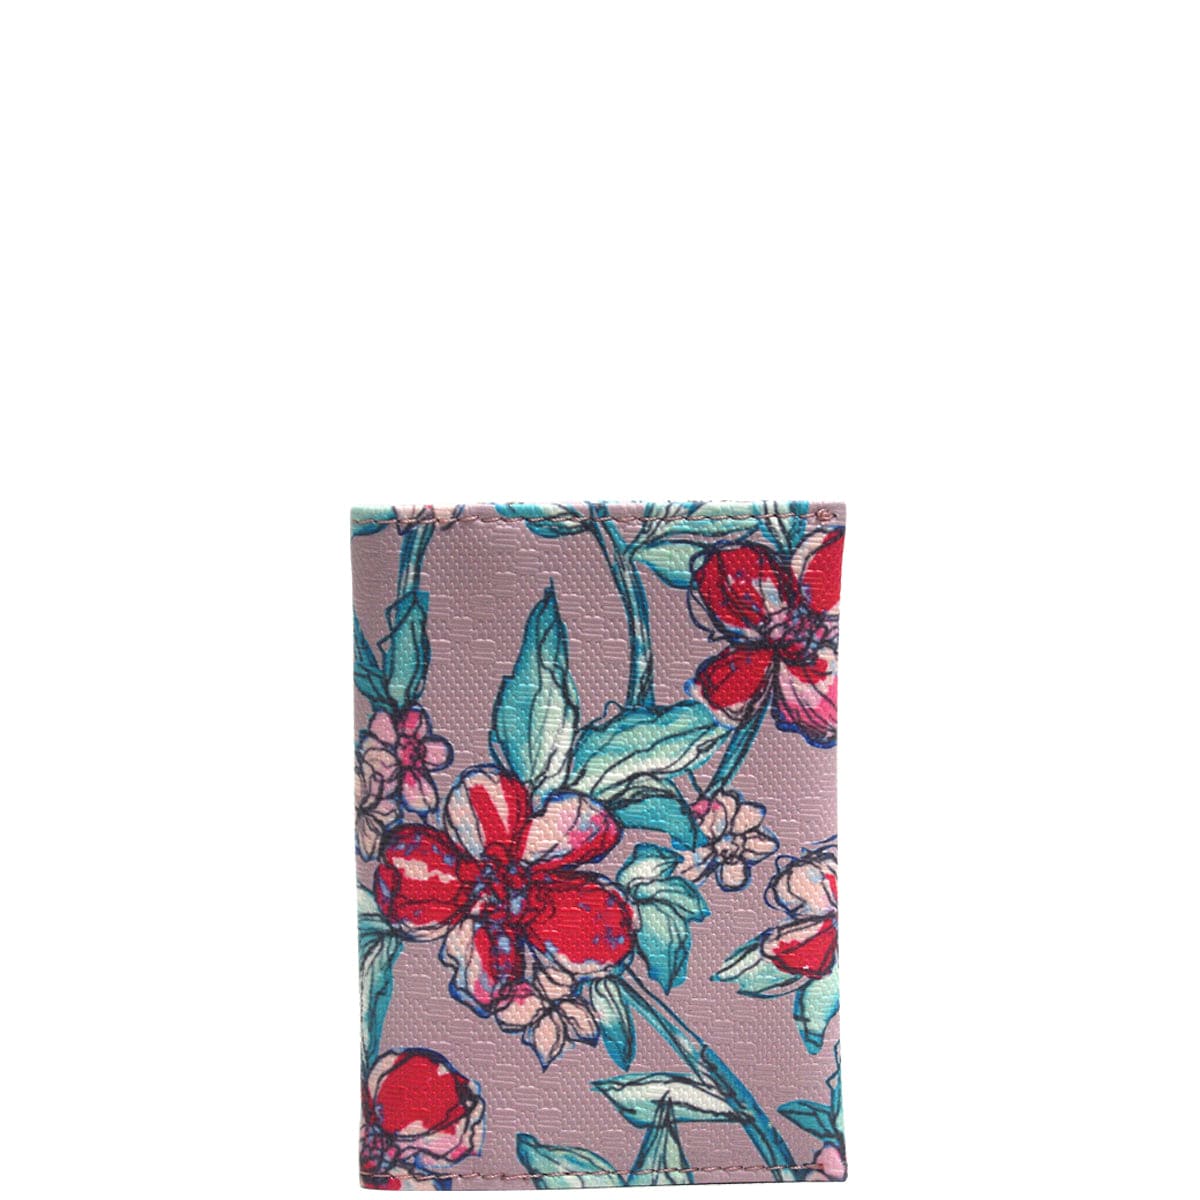 Card Sleeve - Tan Red Sketch Flower - 40% off